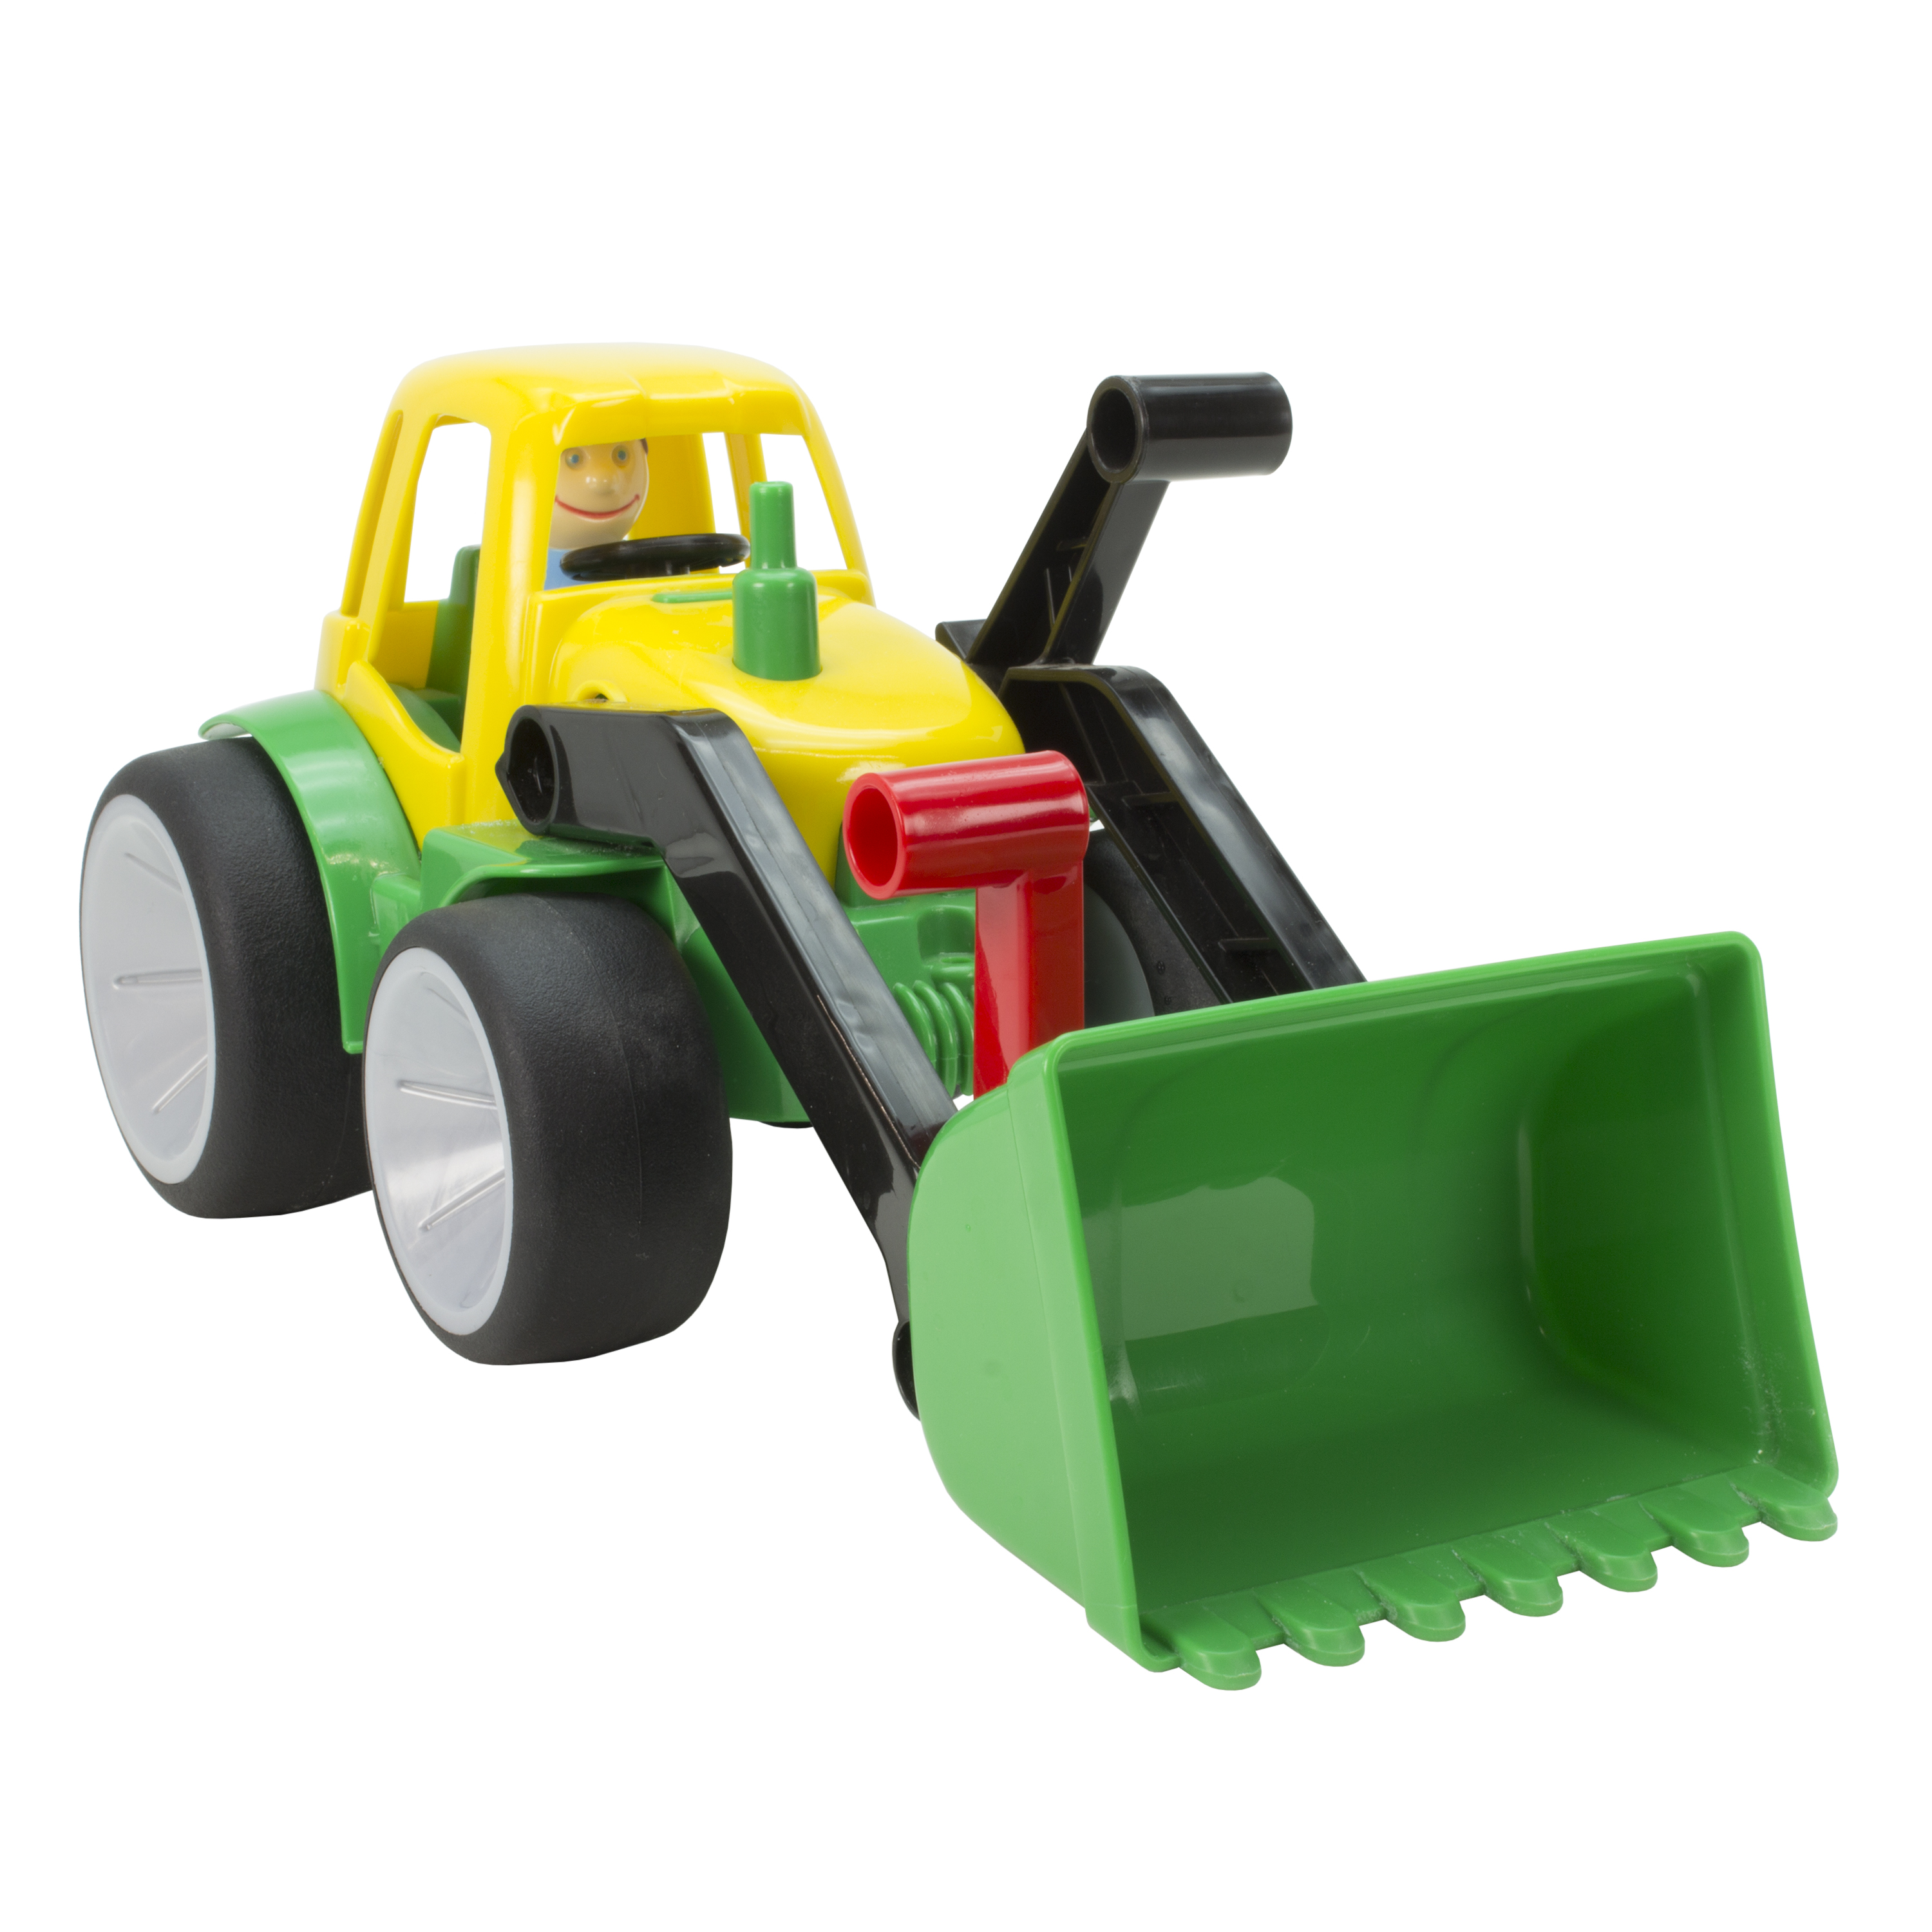 Gowi 'Traktor mit Frontlader'